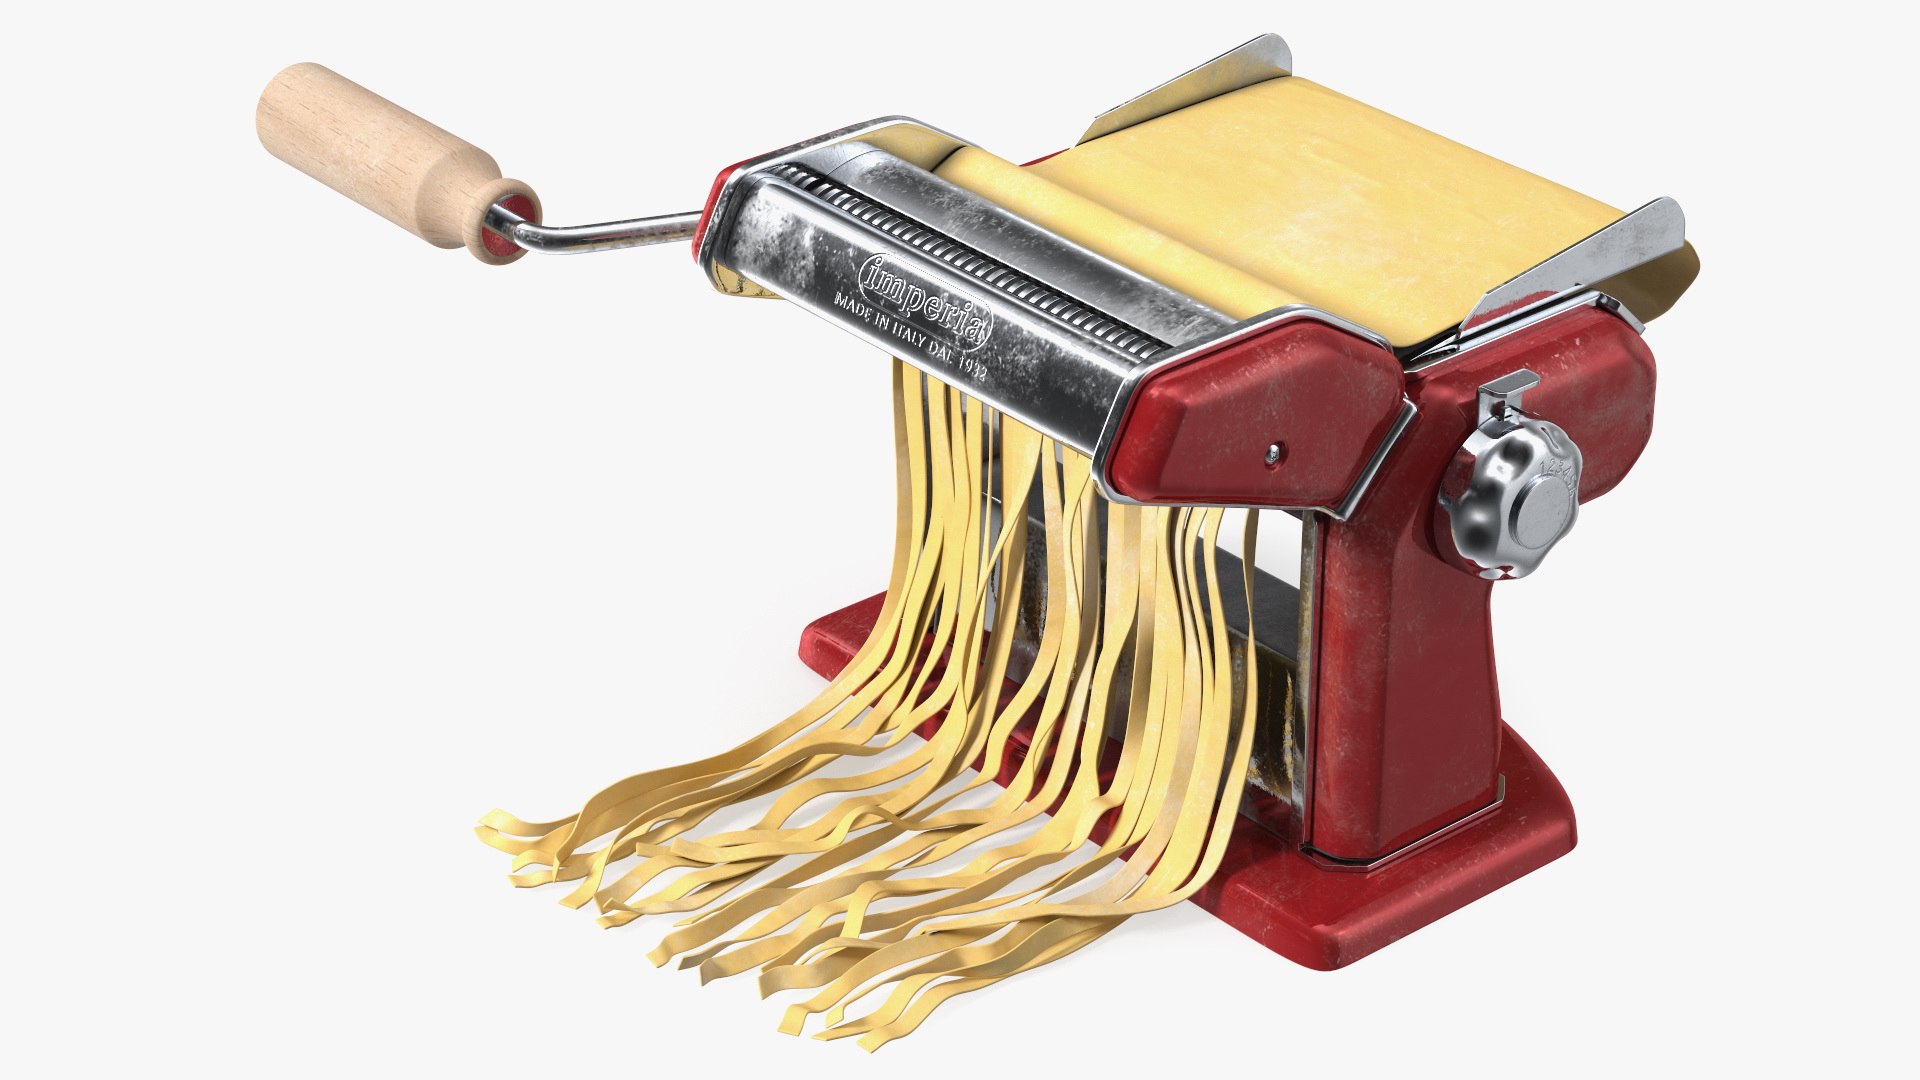 Imperia 2 mm (3/32) Spaghetti Pasta Cutter for Manual and Electric Pasta  Machines